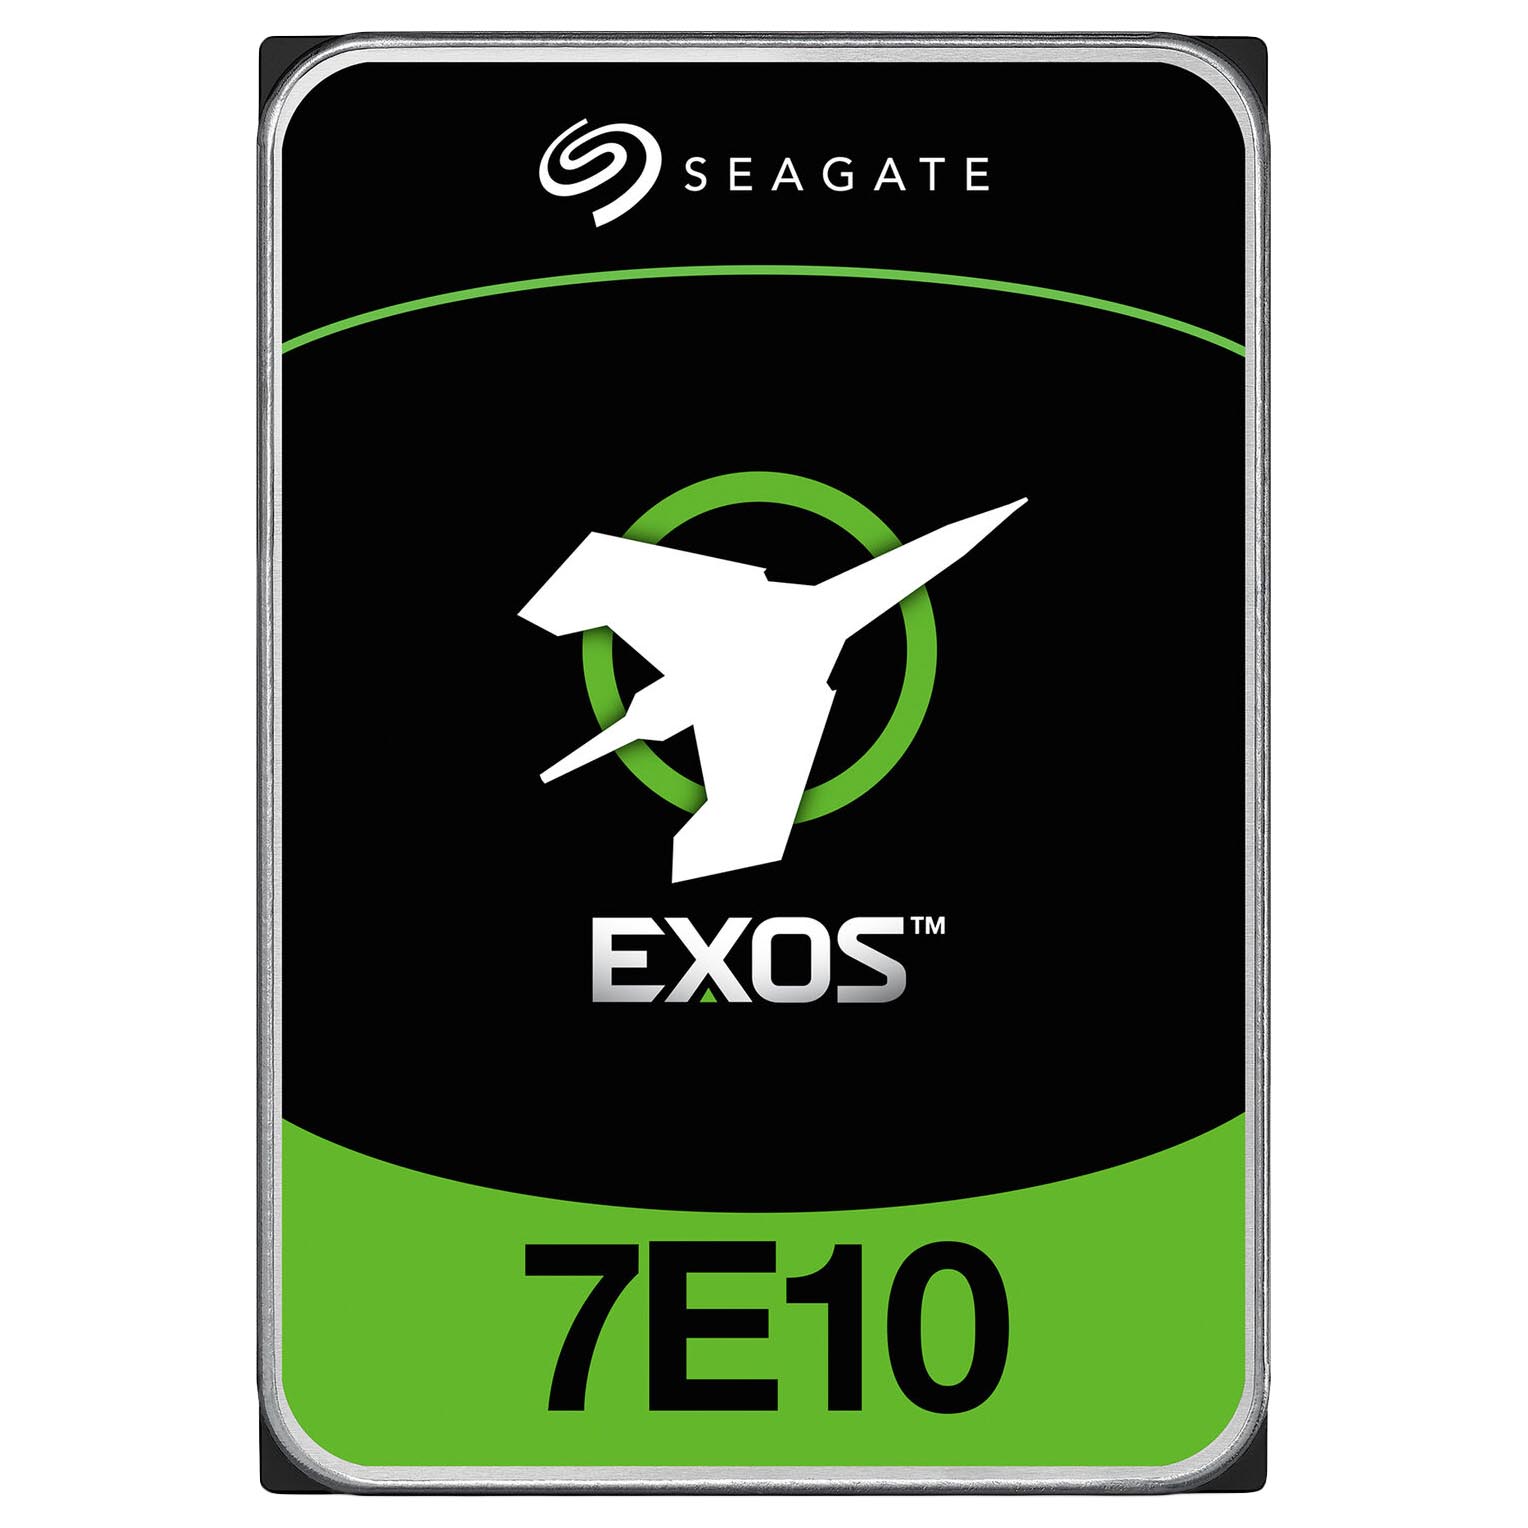 Внутренний жесткий диск Seagate Exos 7E10, ST8000NM018B, 8 Тб жесткий диск seagate 1v420c 1tb 7200 sas 3 5 hdd